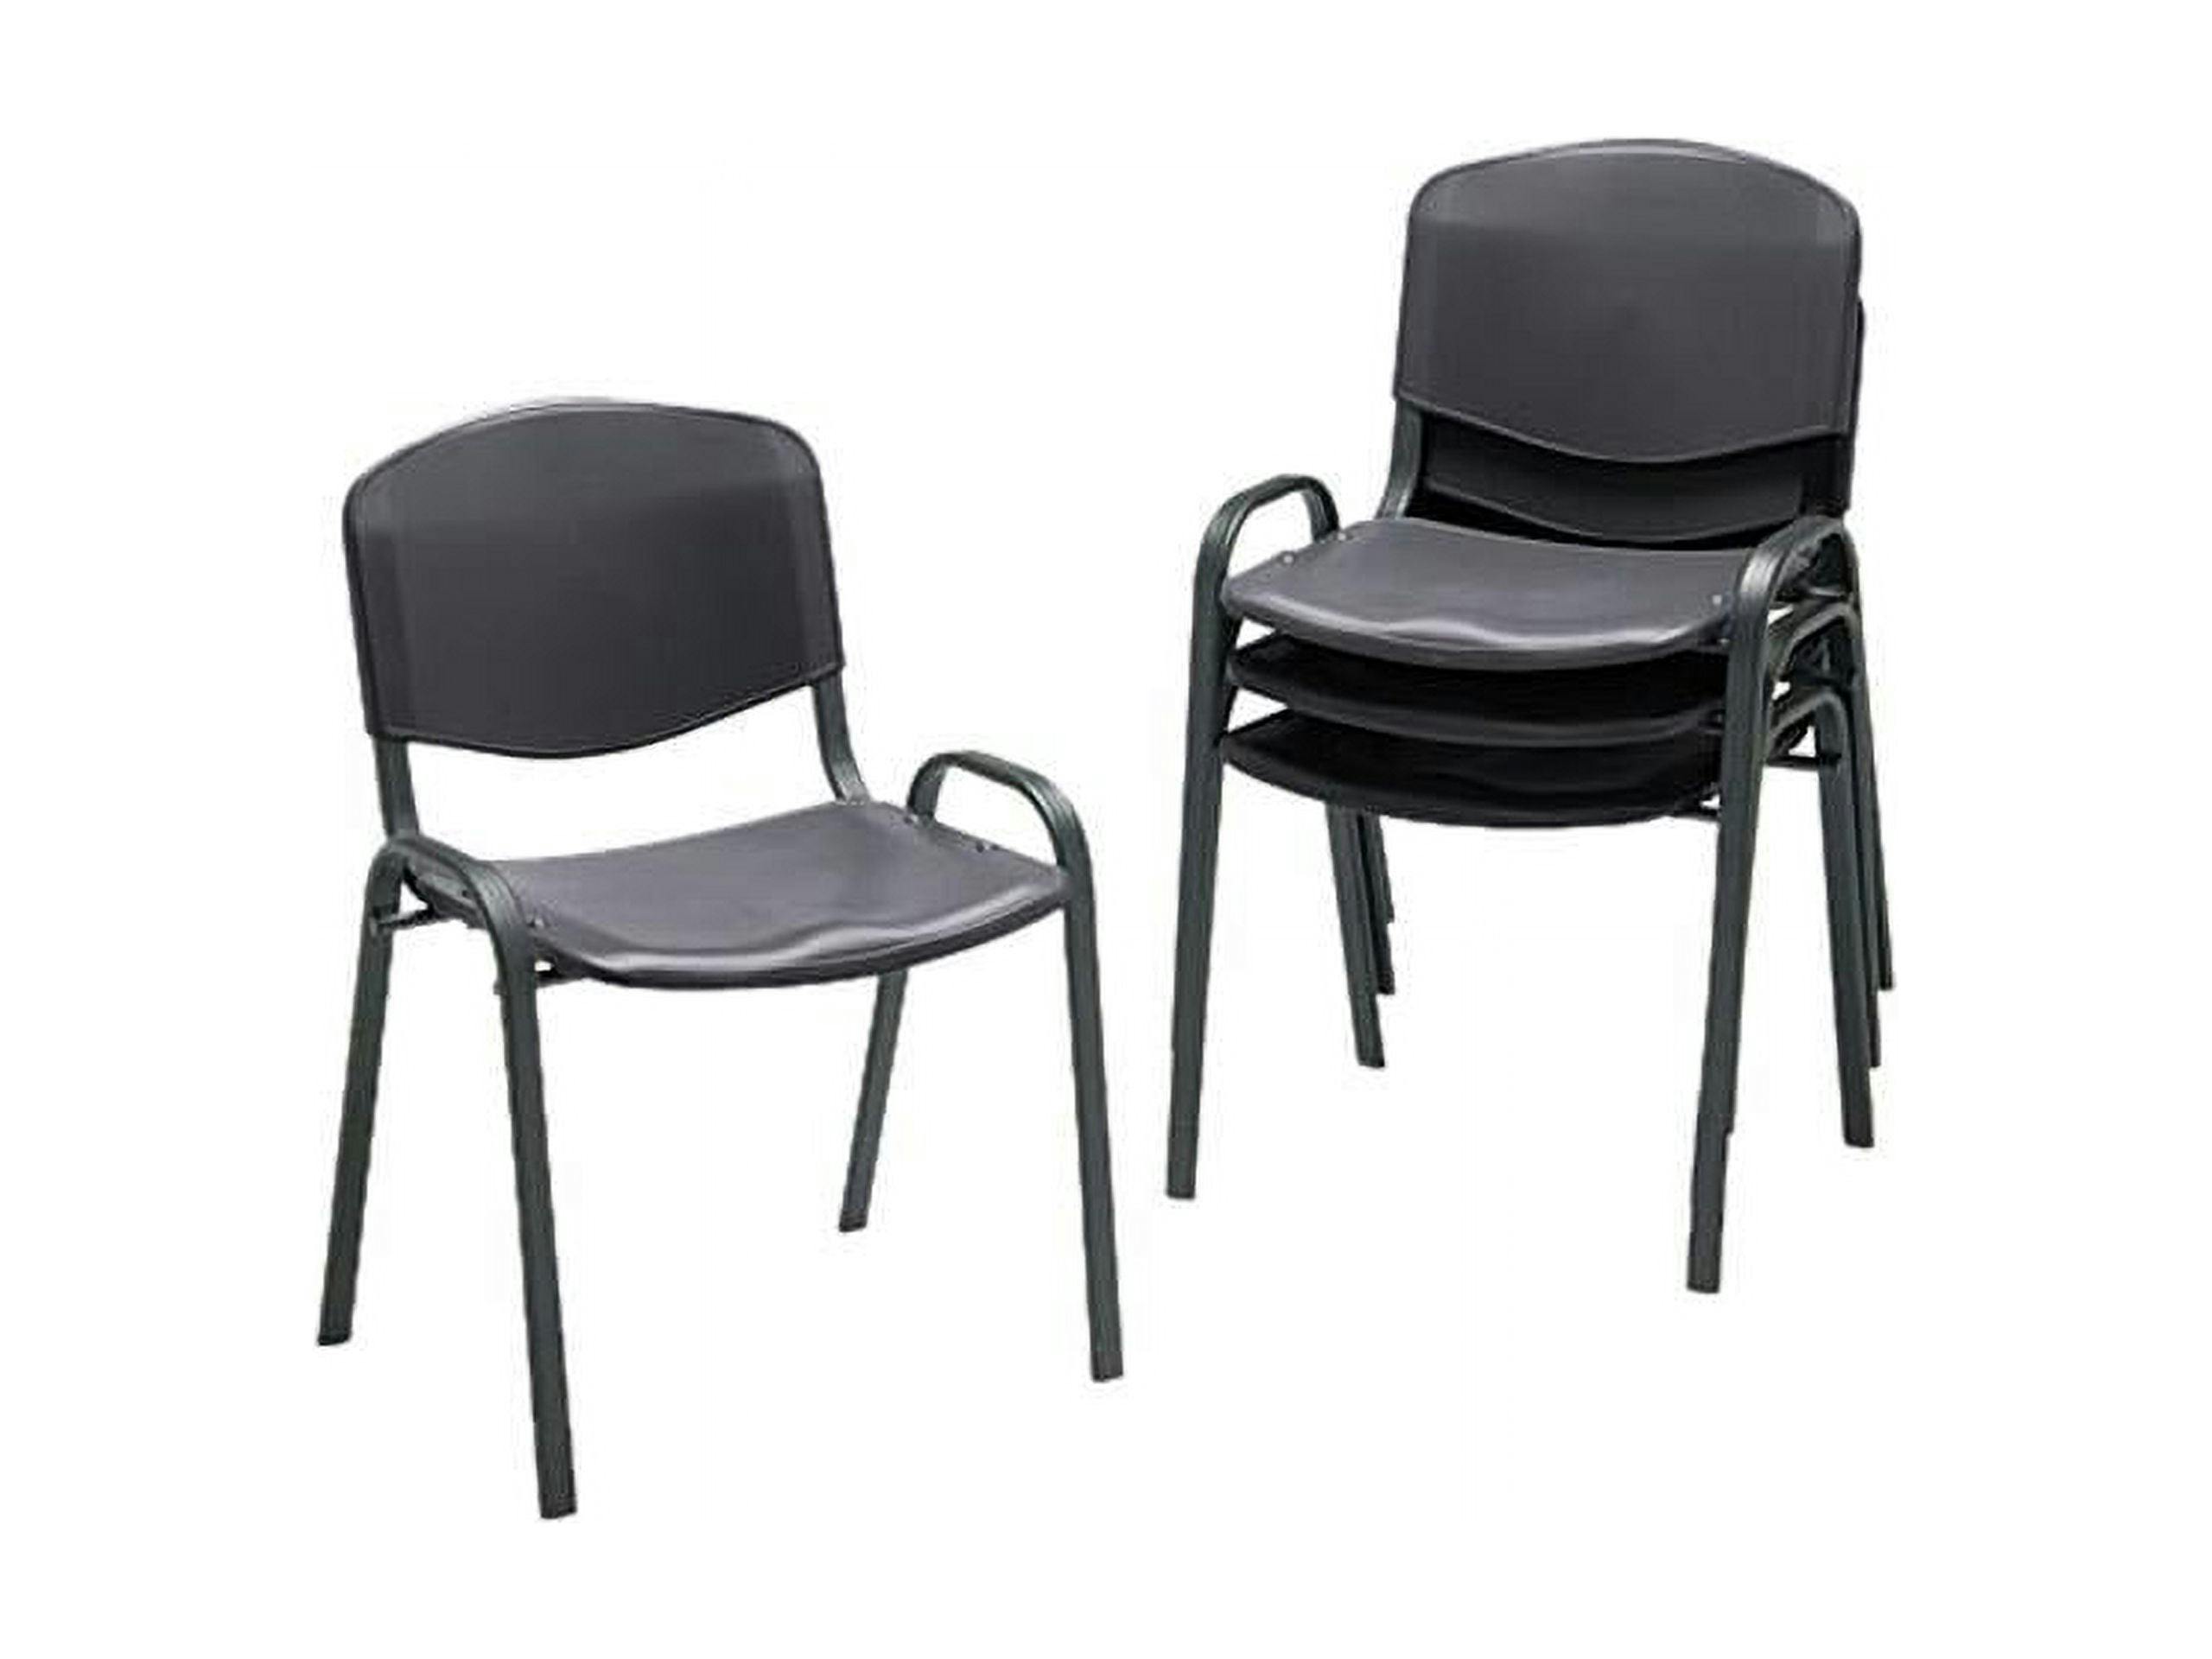 Set of 4 Contoured Black Metal Stacking Chairs